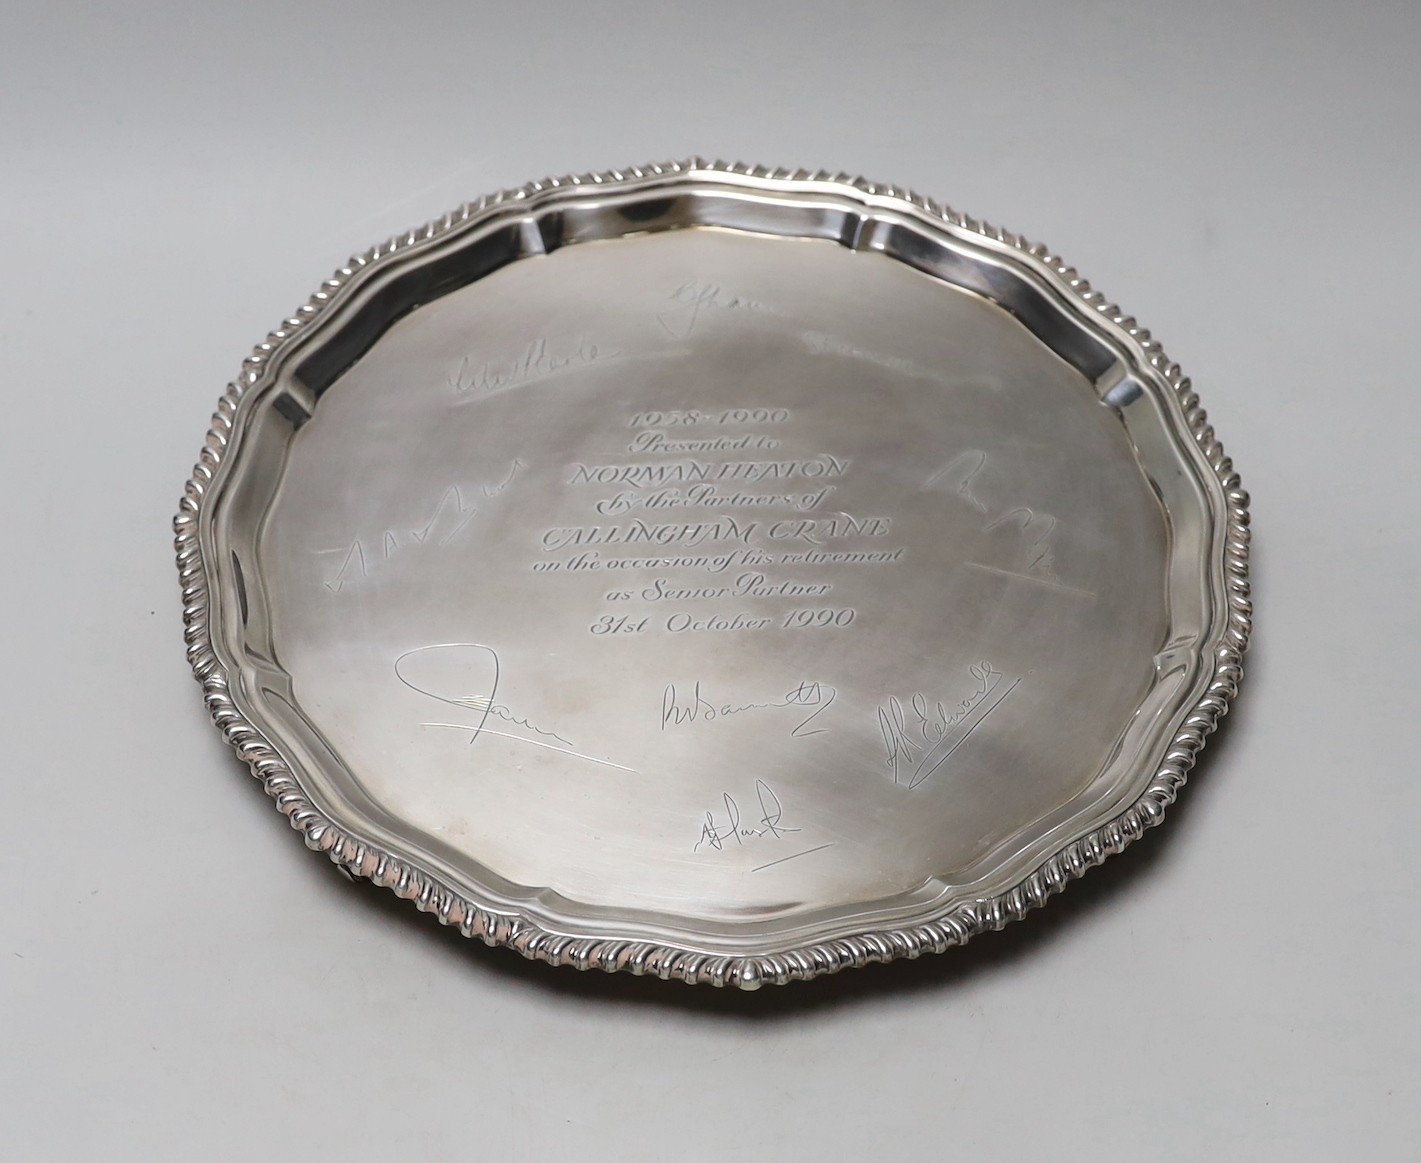 An Elizabeth II silver salver, with engraved signatures and inscription, C.J. Vander Ltd, London, 1990, 31cm, 31.6oz.